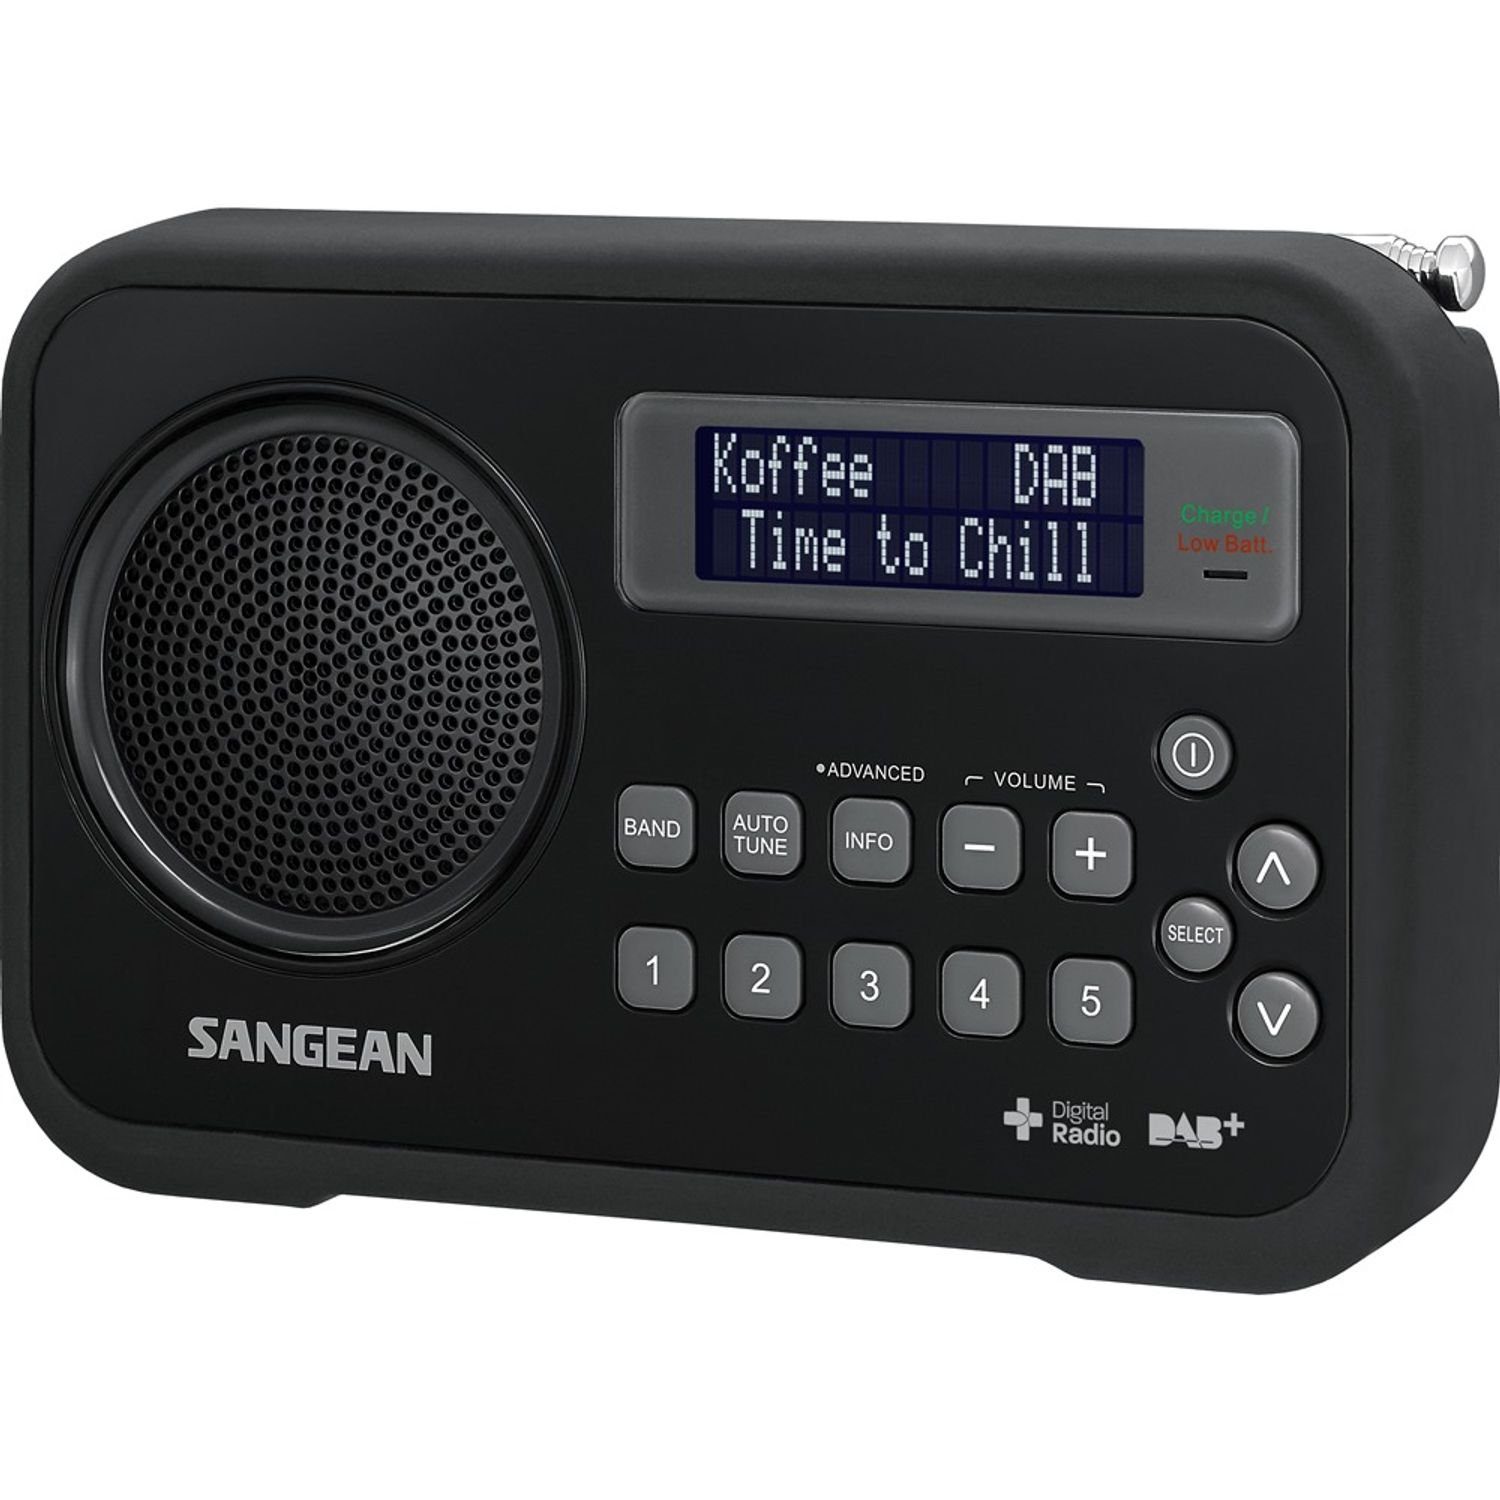 Digitalempfänger Sangean (DAB) DAB+ / DPR-67 Digitalradio schwarz (DAB) FM-RDS